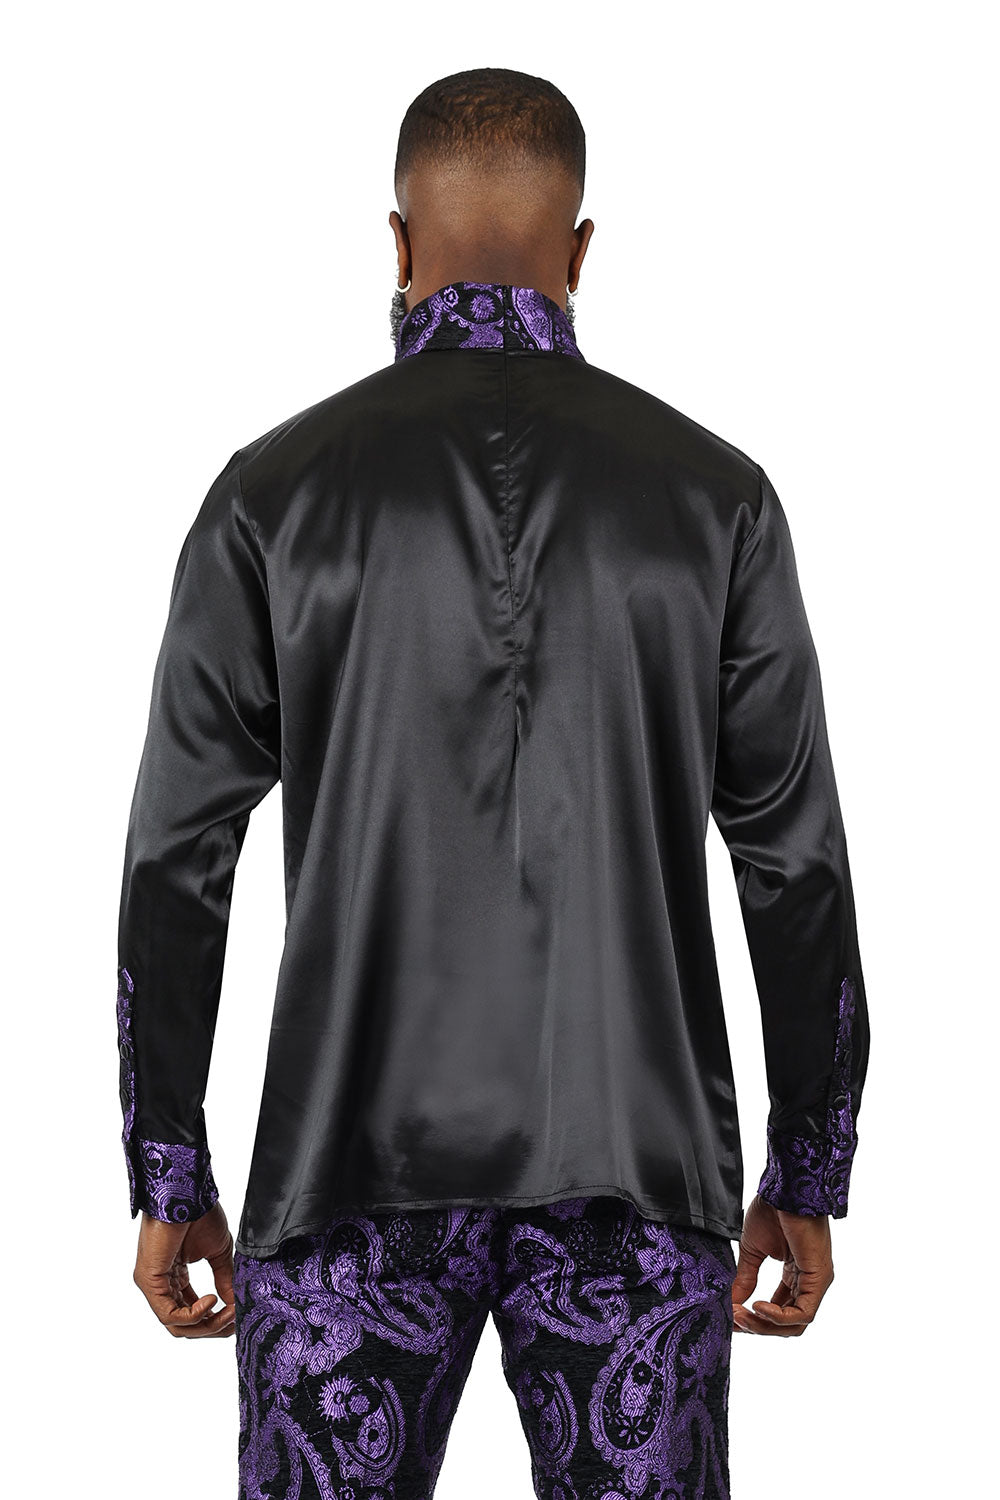 BARABAS Men's Paisley Long Sleeve Turtle Neck shirt 3MT05 Puple